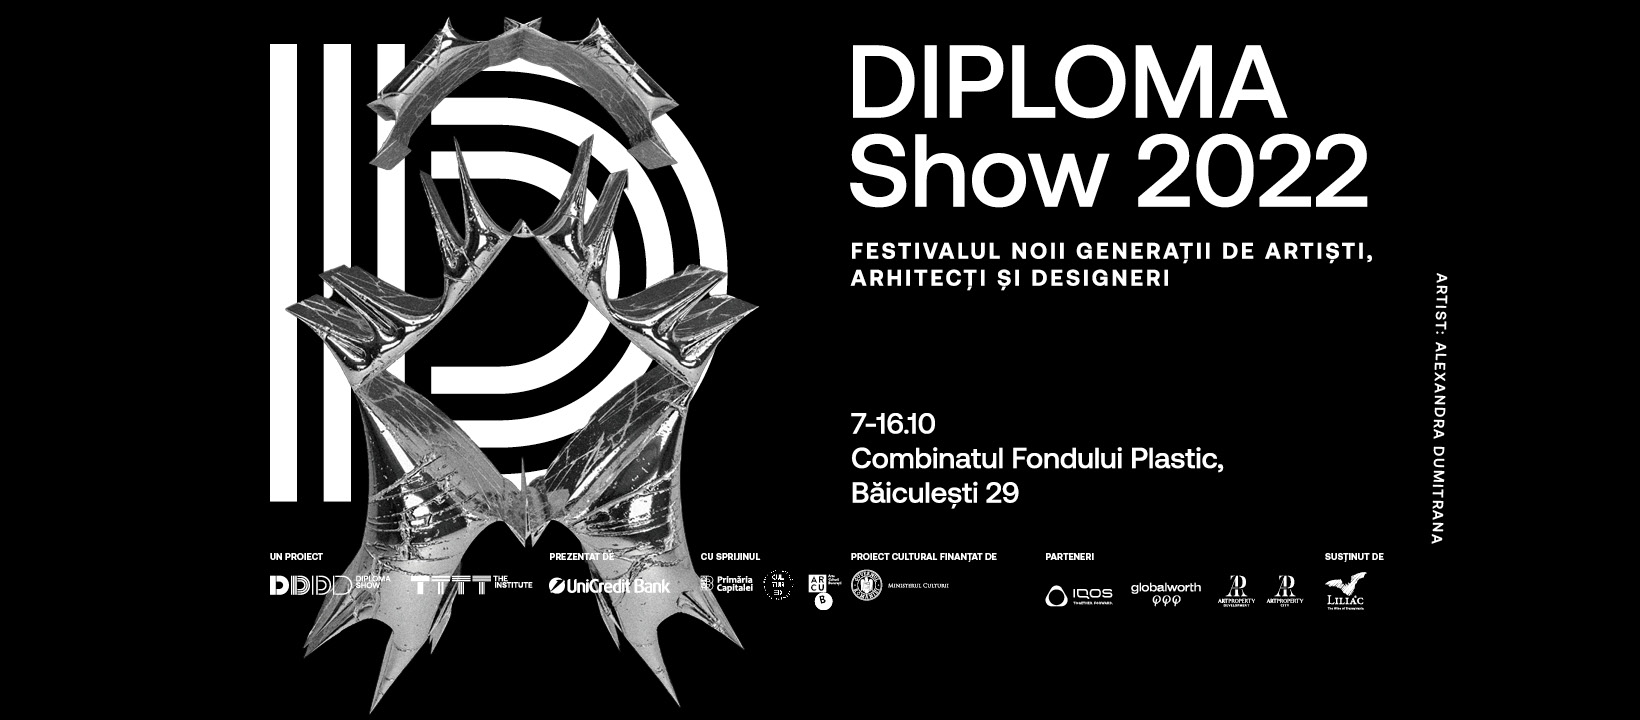 DIPLOMA Show 2022